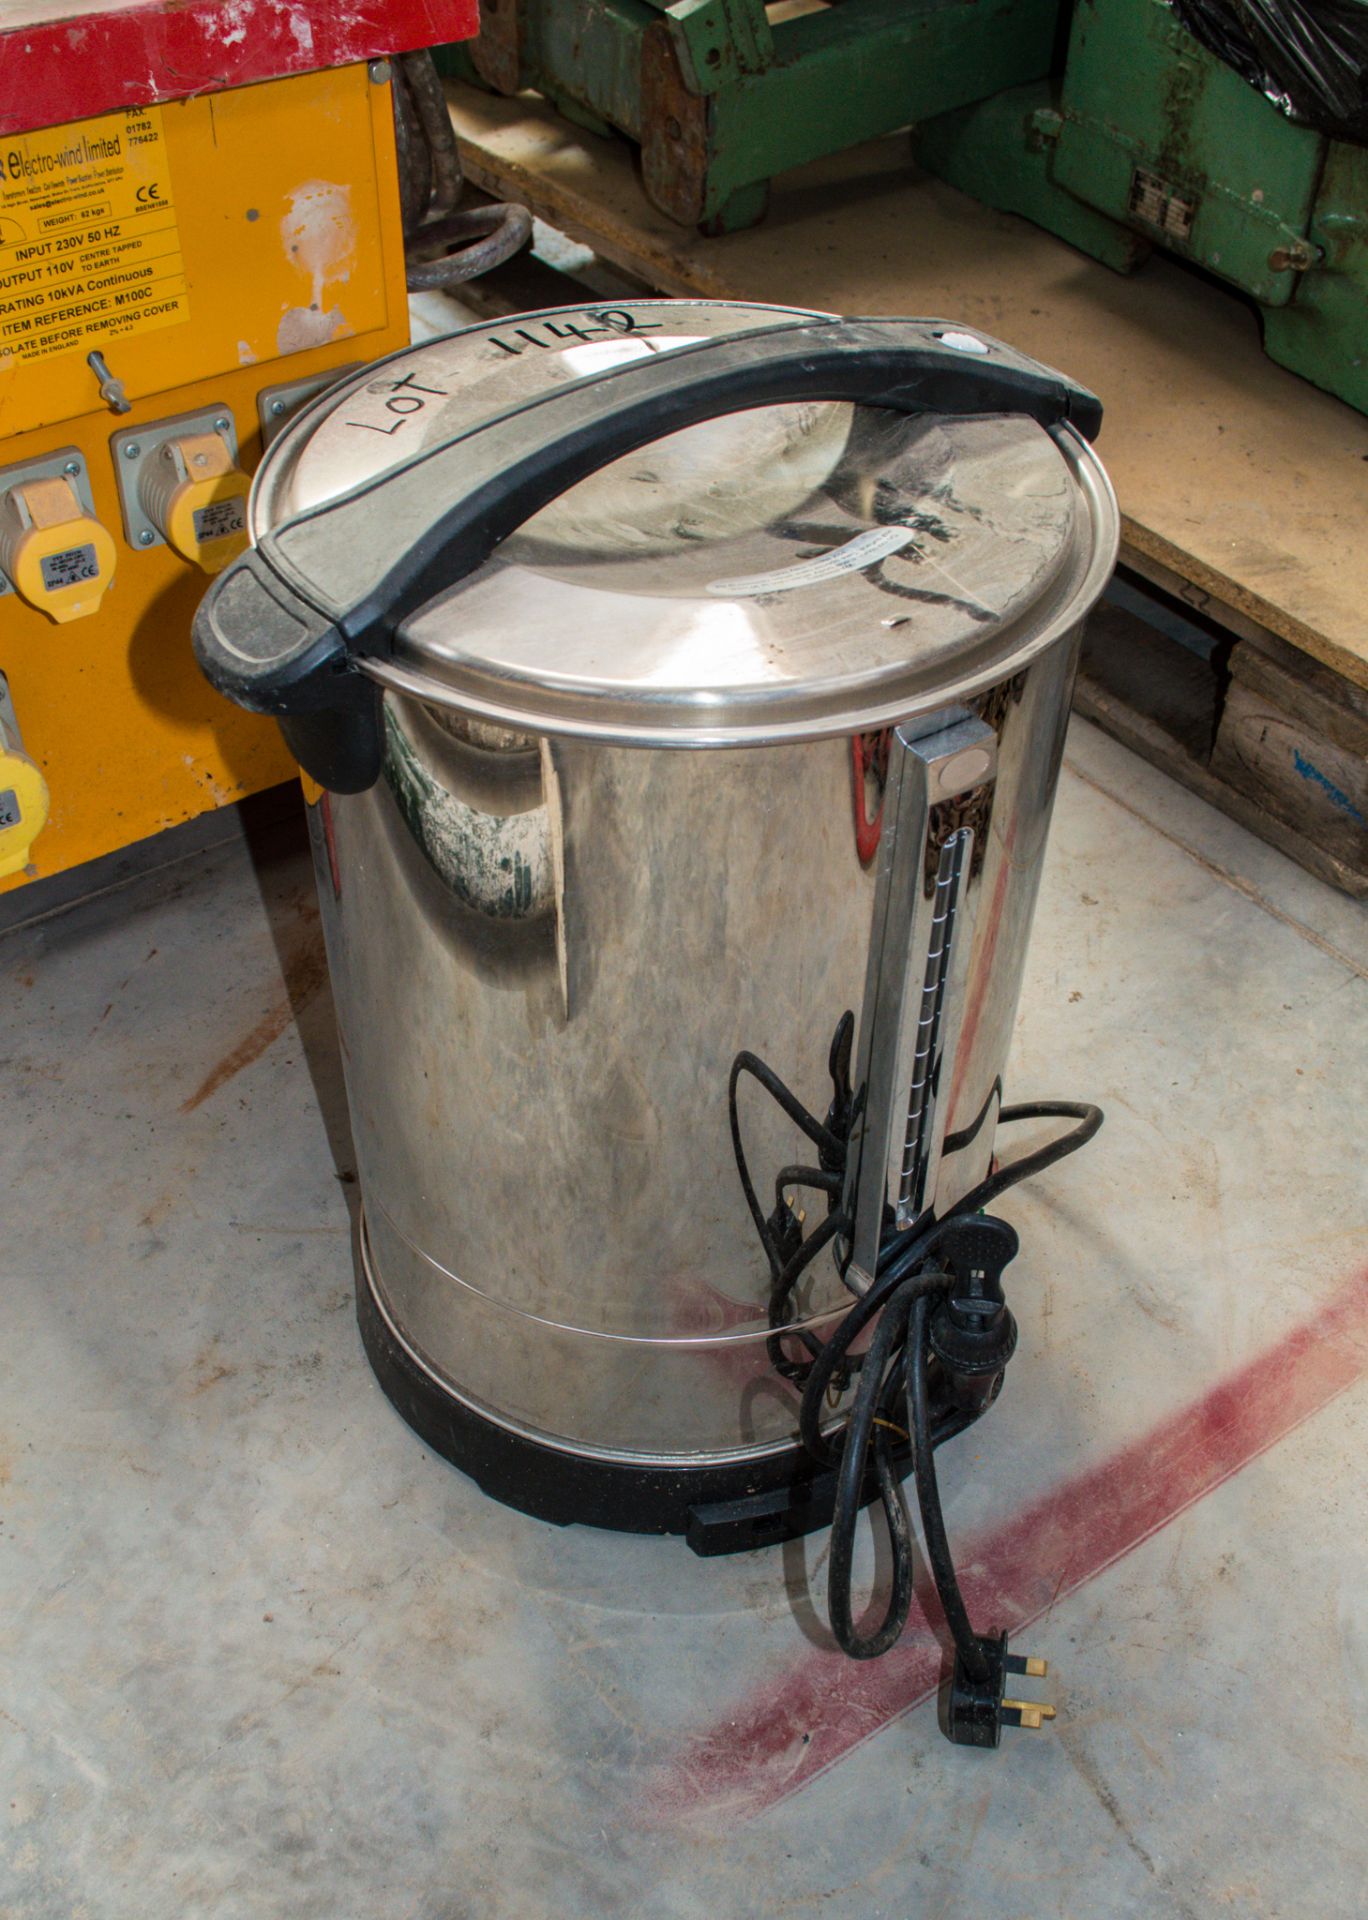 240v water boiler urn